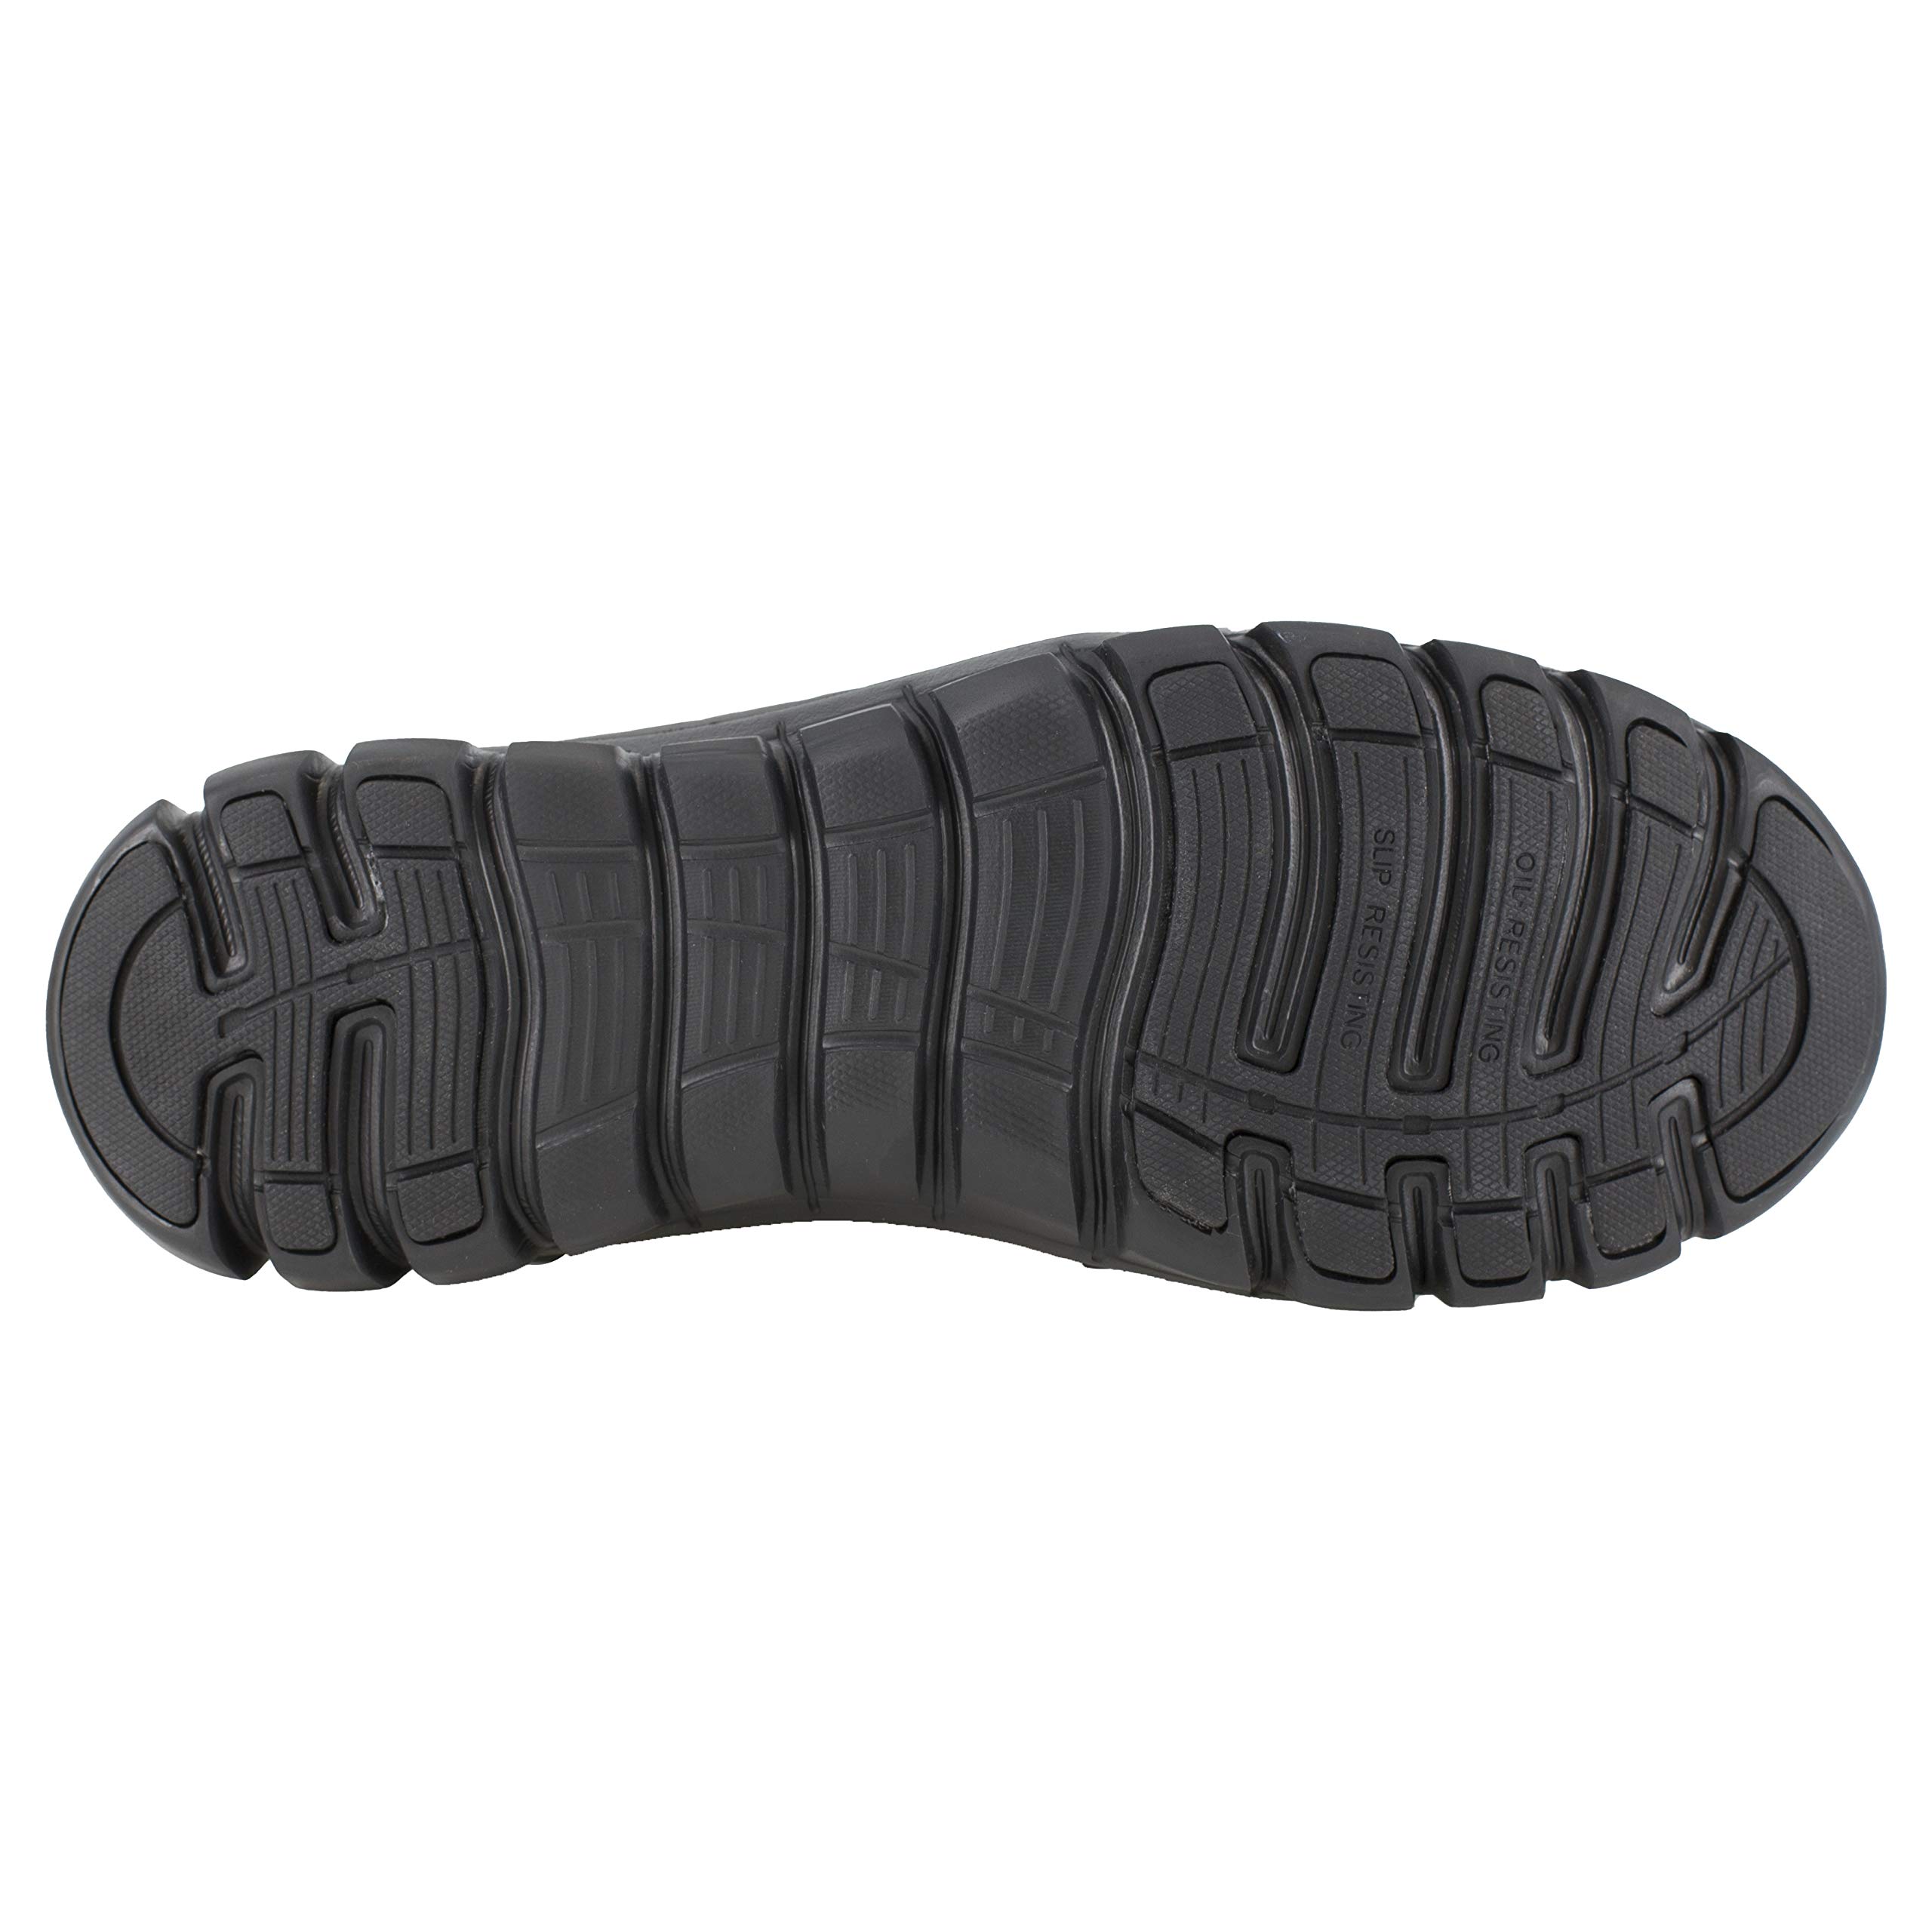 Reebok Men's Sublite Cushion Safety Toe Athletic Work Shoe Industrial